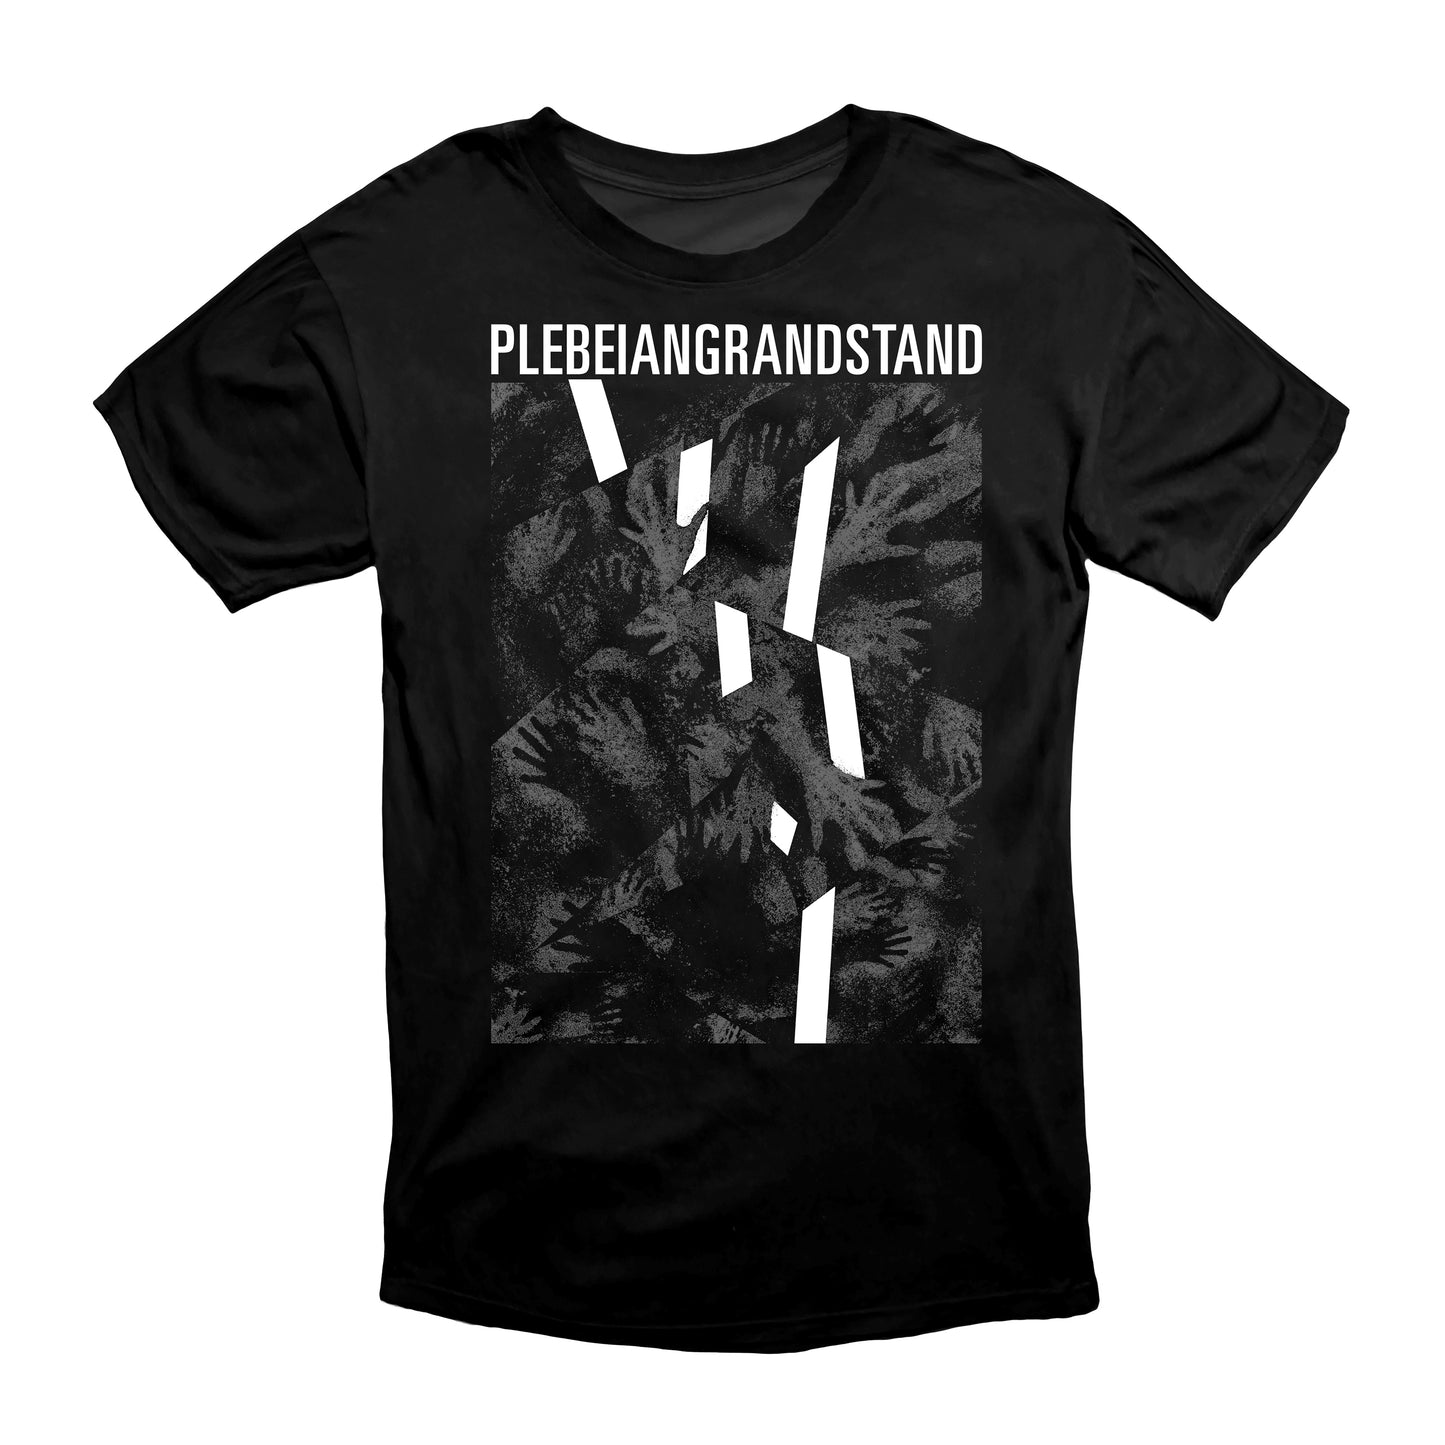 PLEBEIAN GRANDSTAND "RIEN NE SUFFIT" CD + T-Shirt Bundle